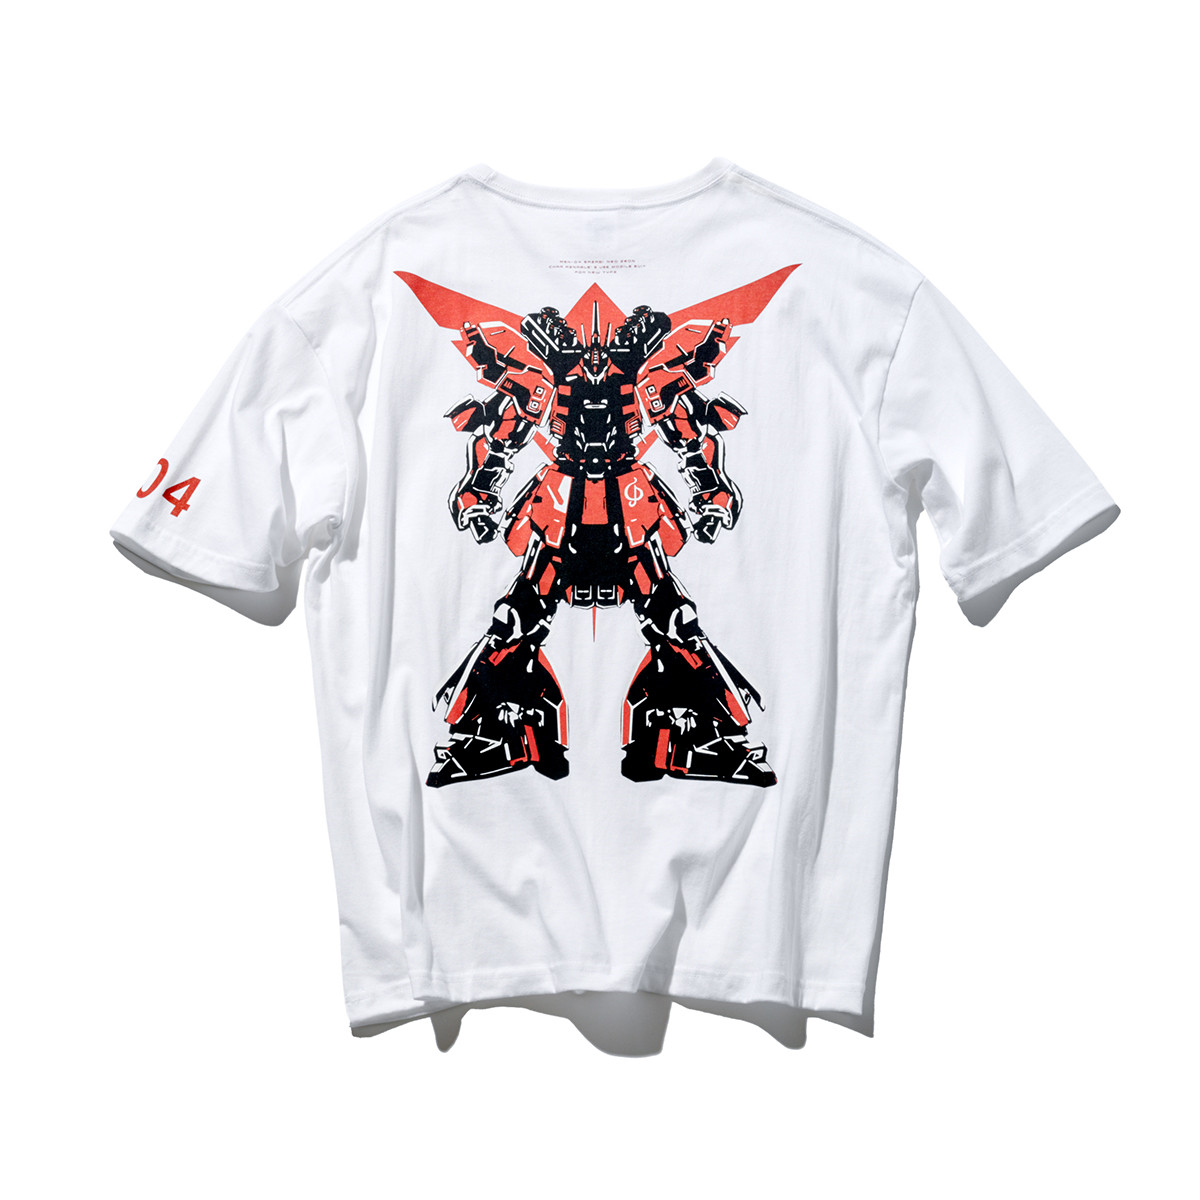 Sazabi Big Size T-shirt—Mobile Suit Gundam: Char's Counterattack